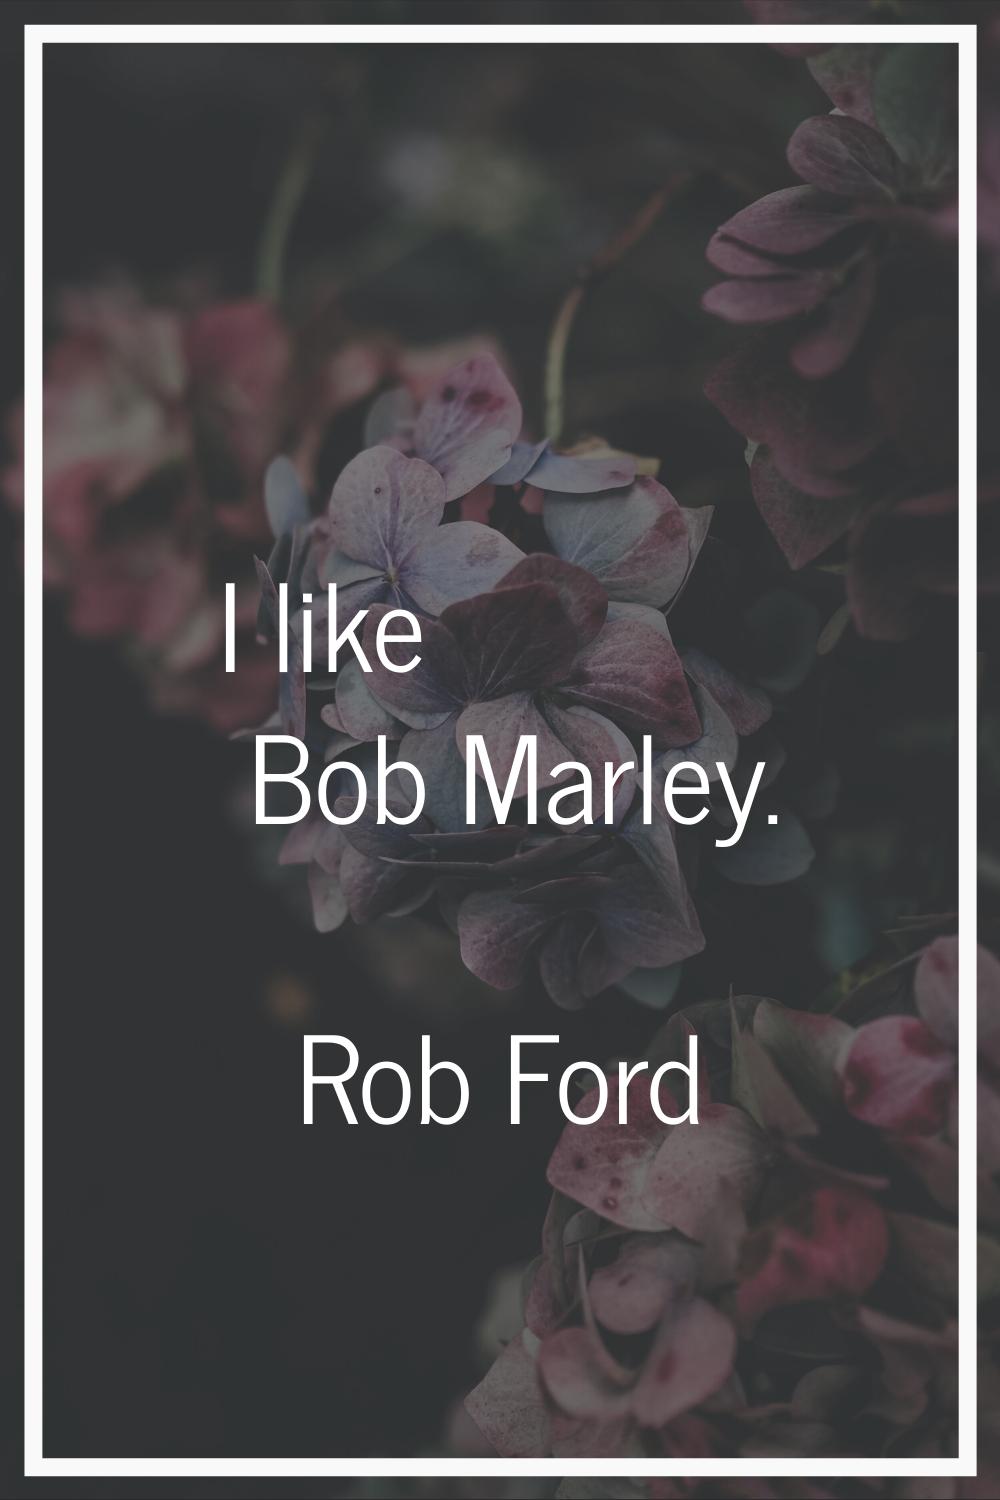 I like Bob Marley.